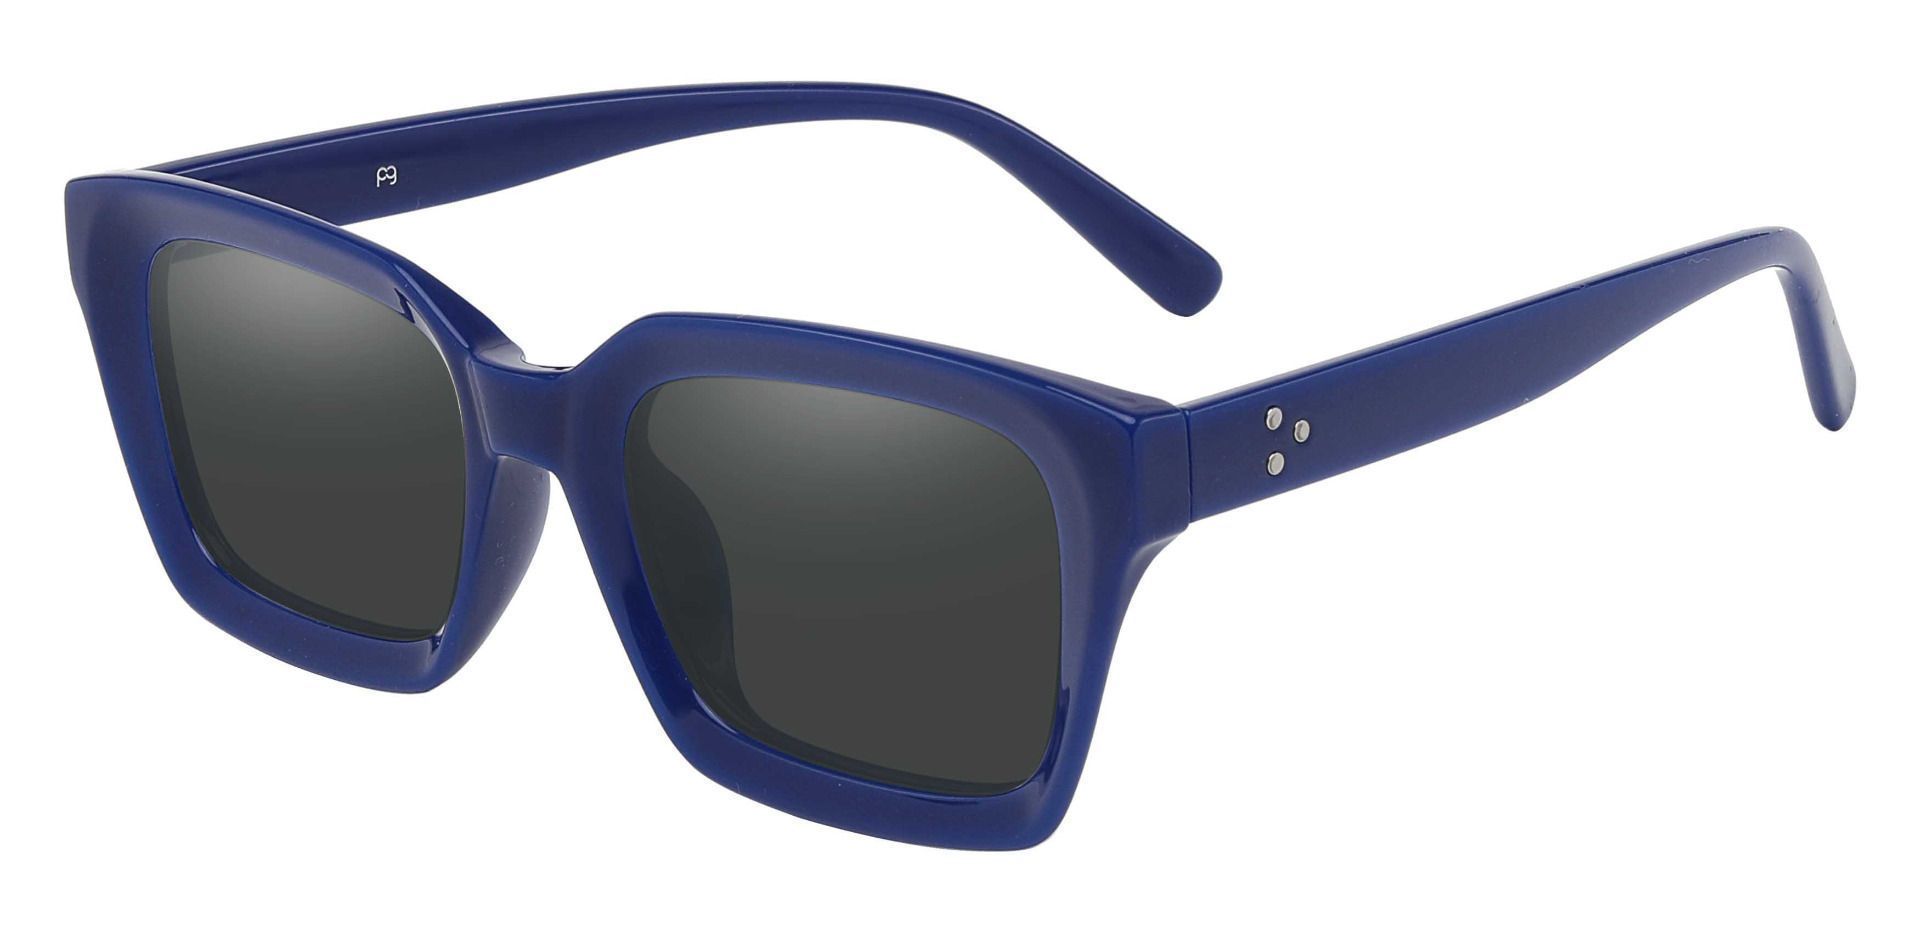 Unity Rectangle Prescription Sunglasses - Blue Frame With Gray Lenses